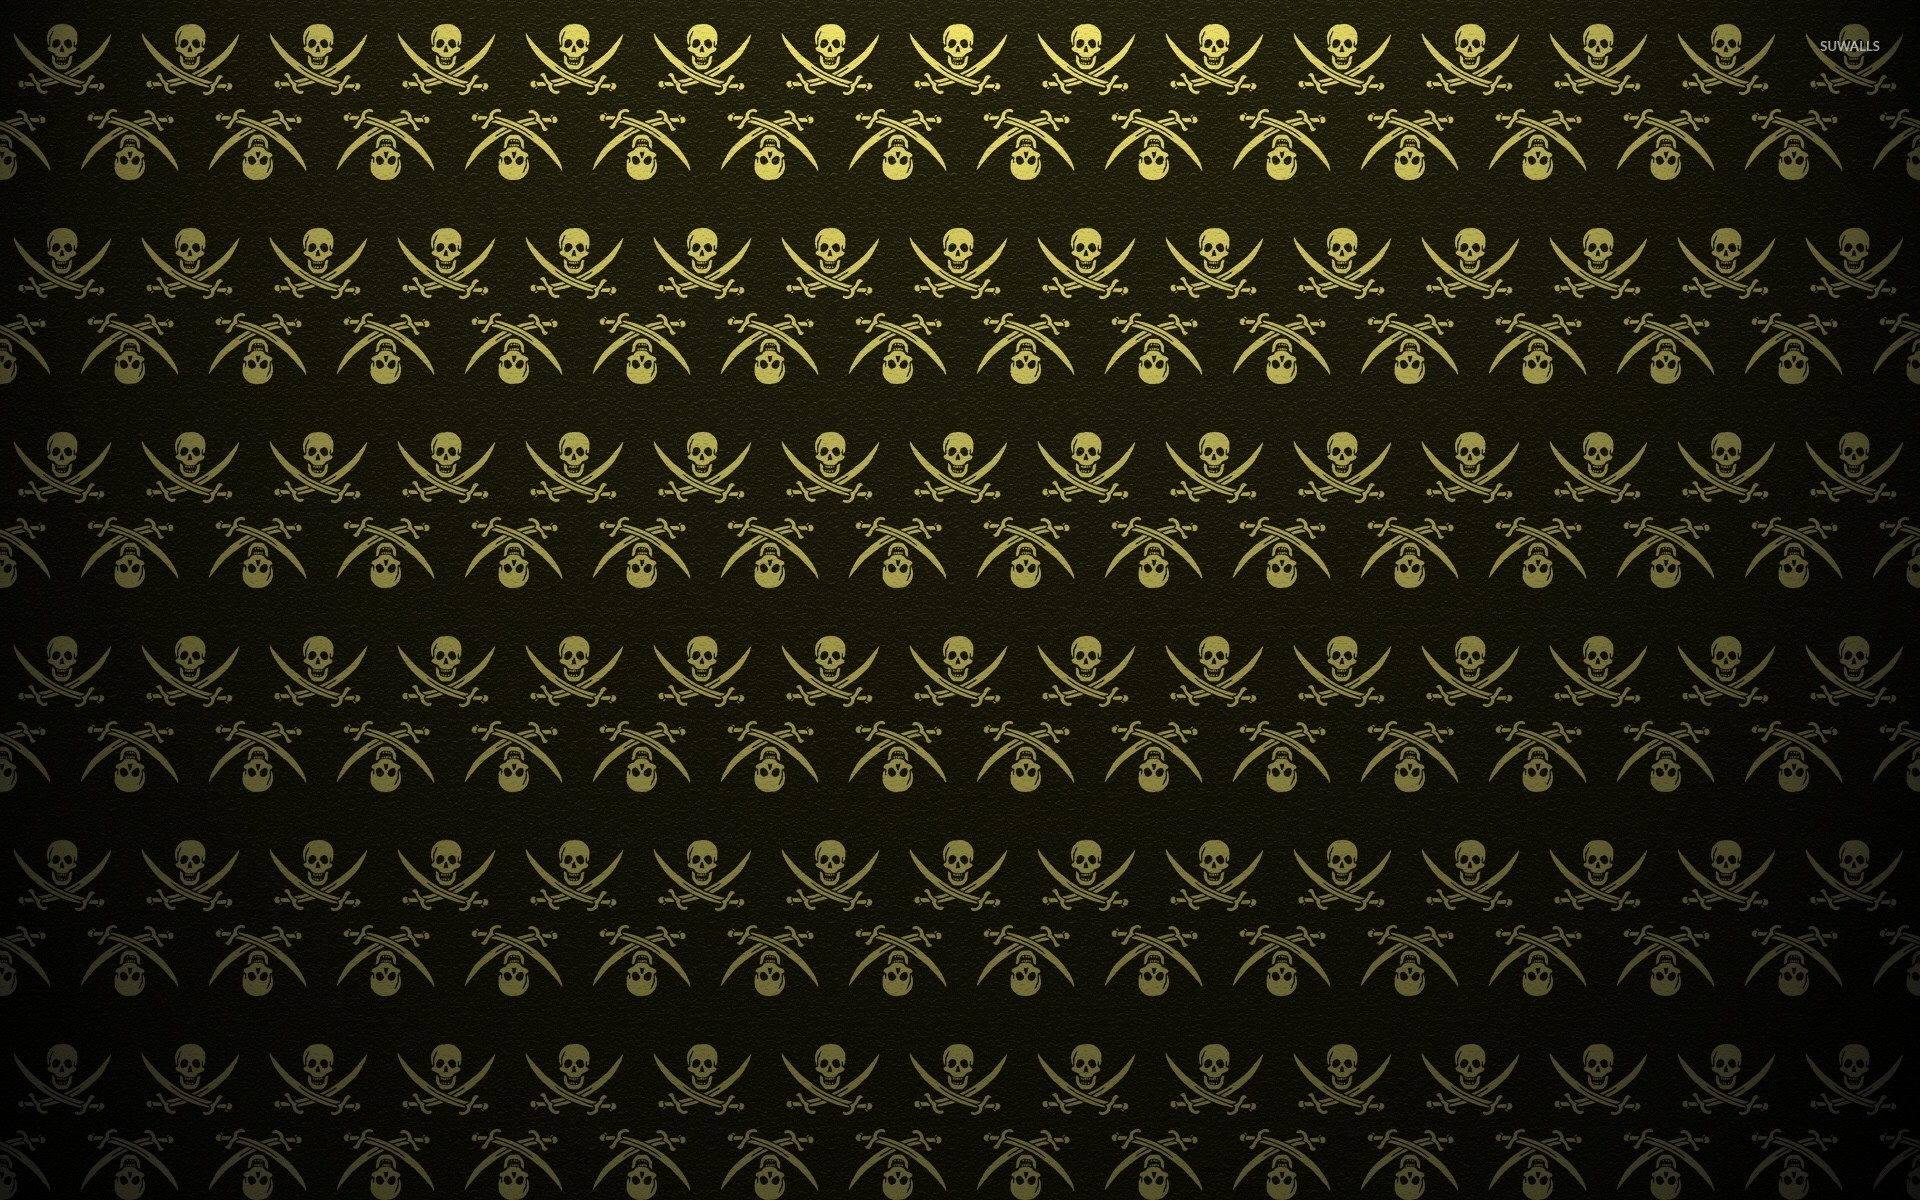 Pirate flag pattern wallpaper jpg